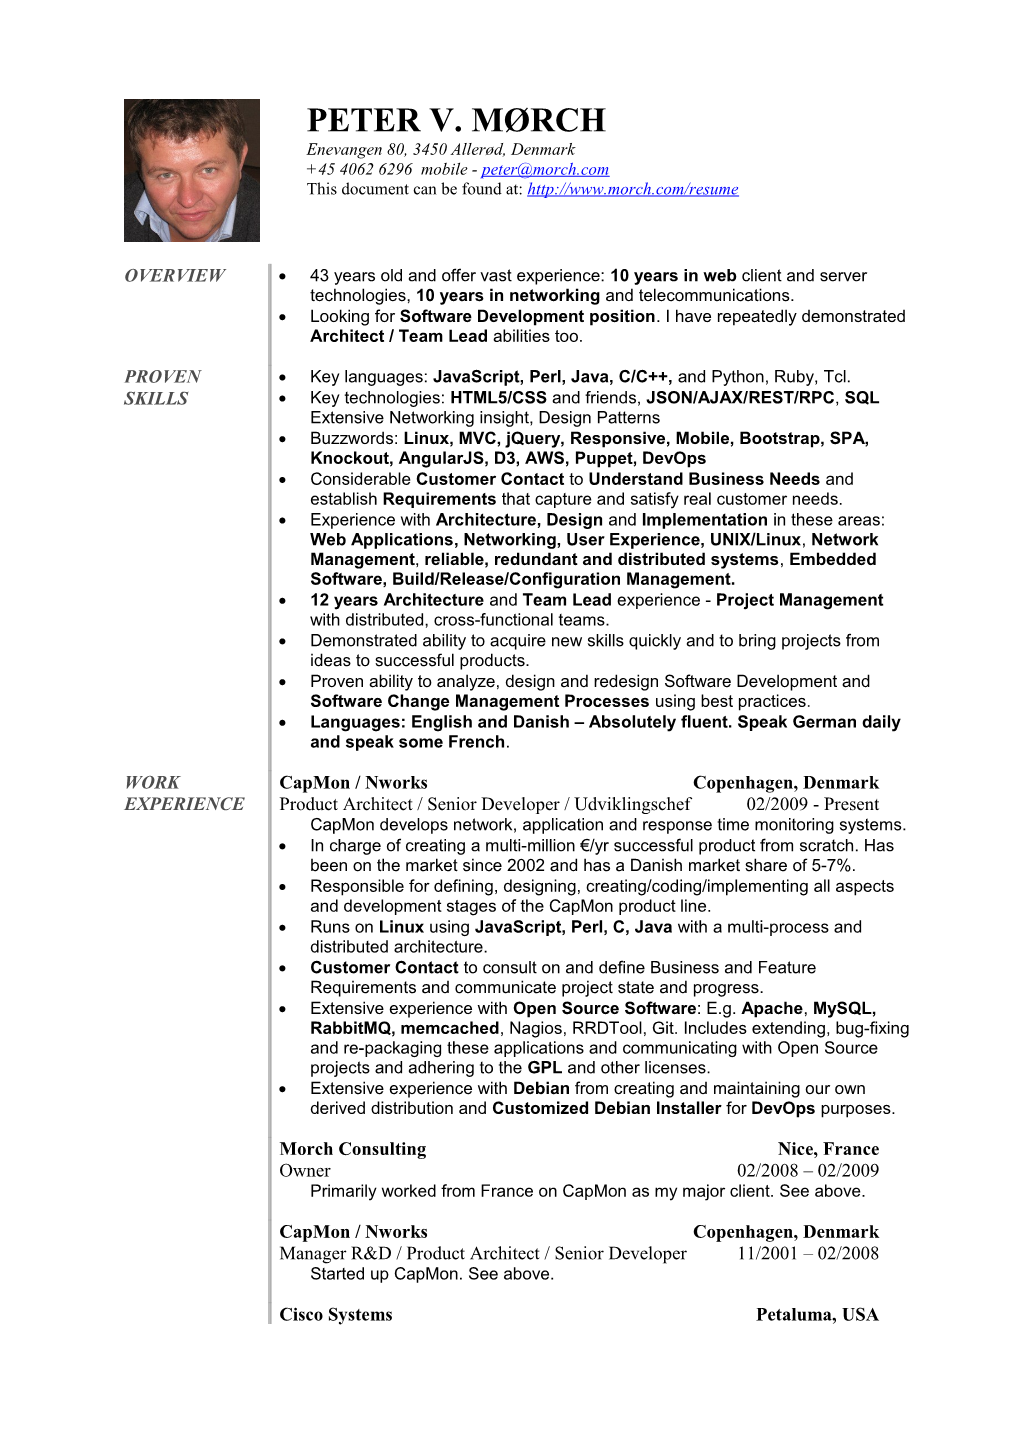 Resume for Peter Mørch